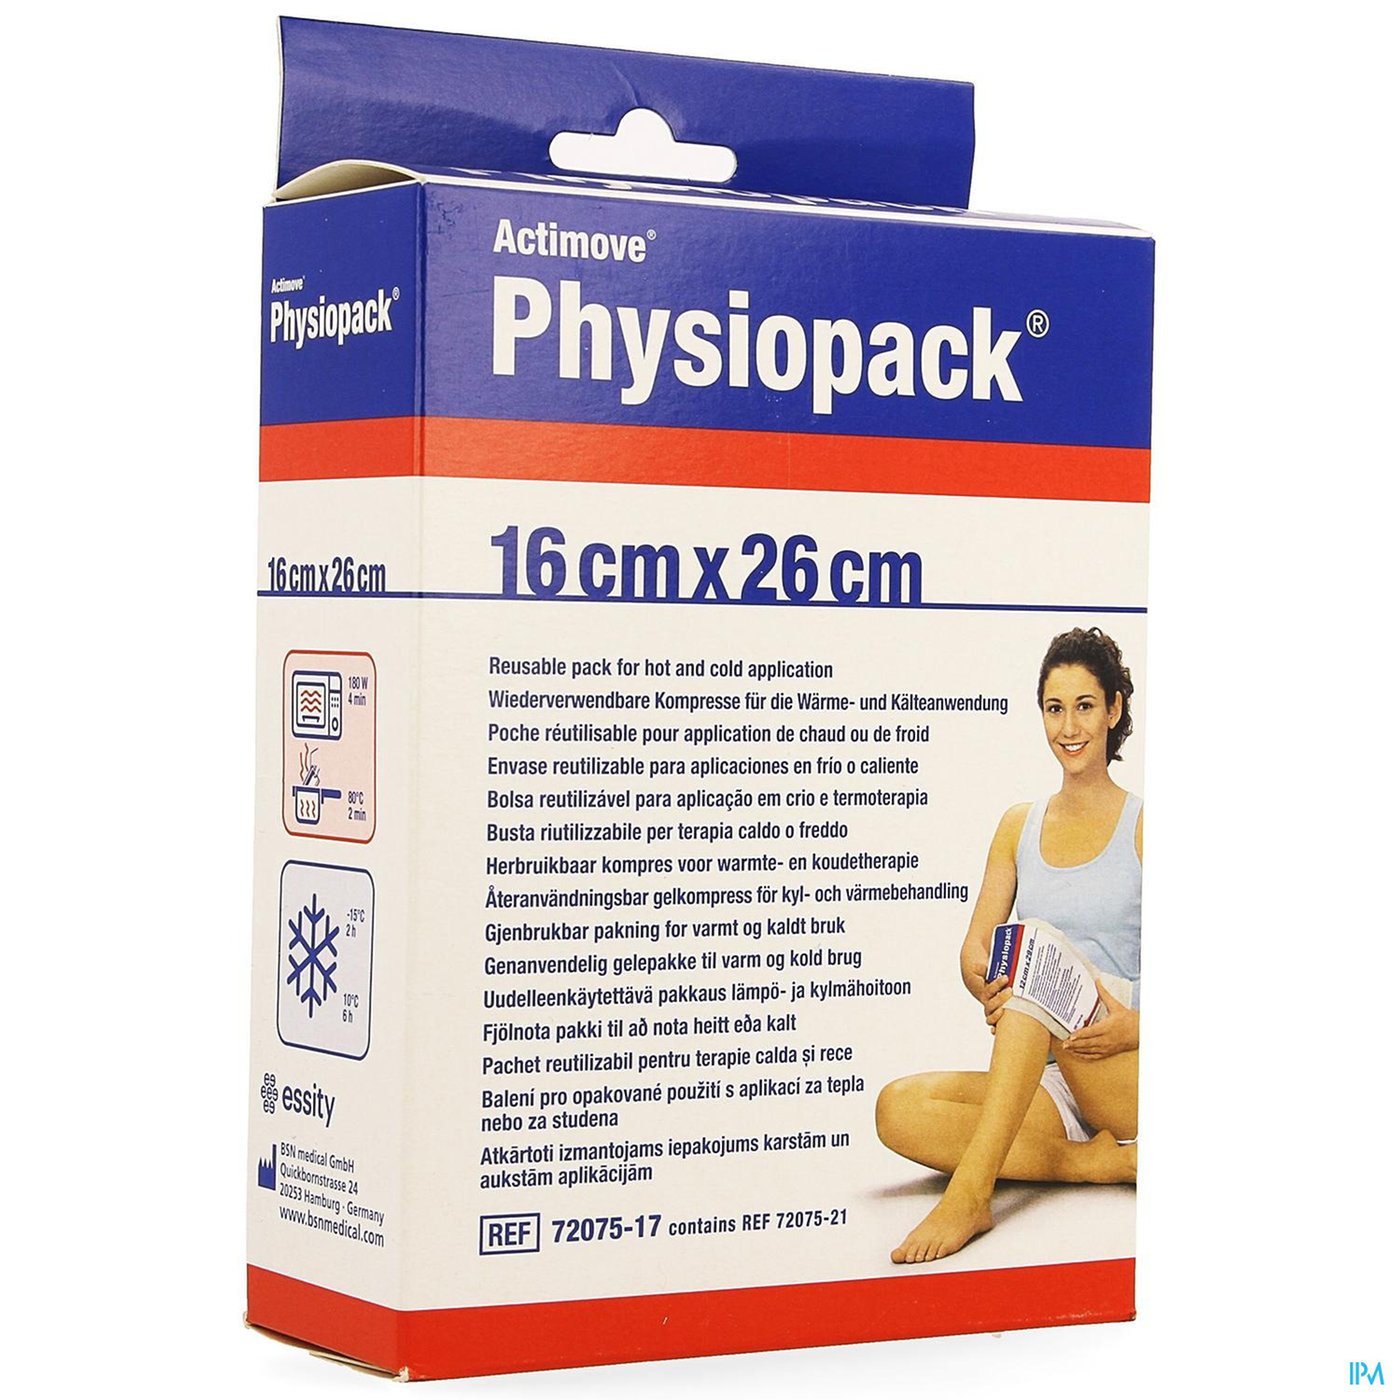 Actimove Physiopack 16cmx26cm 1 7207517 packshot